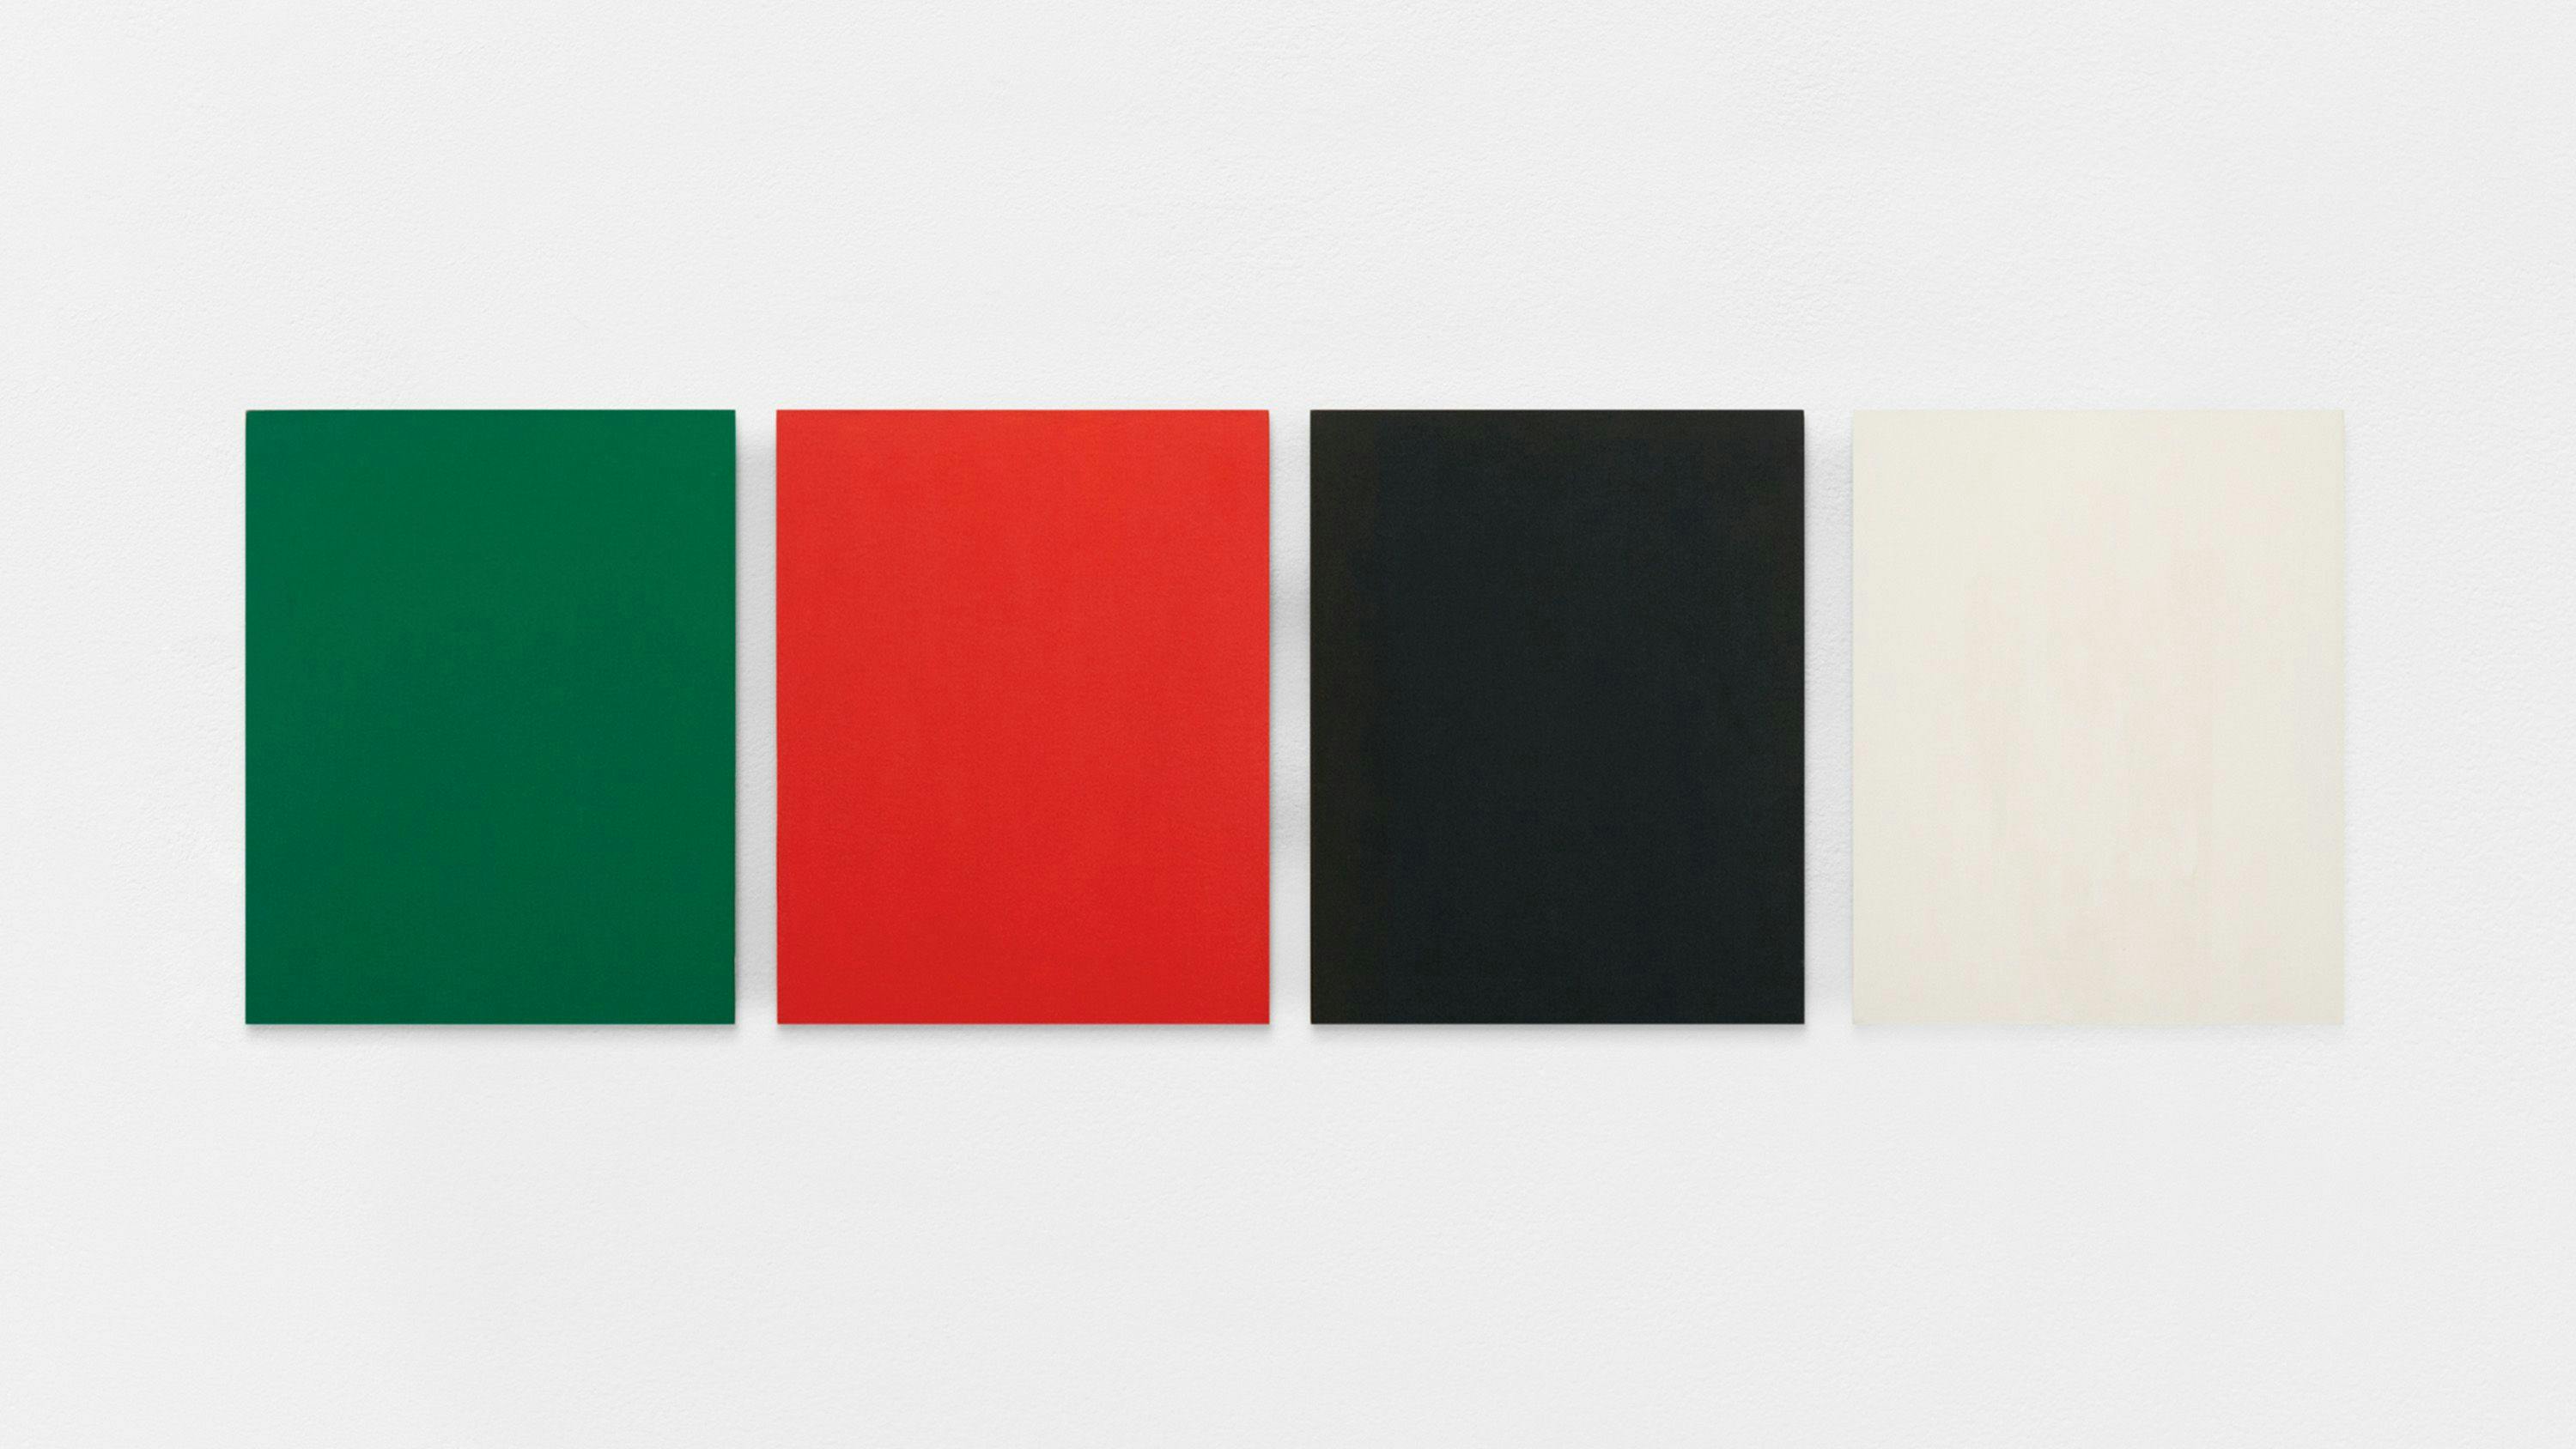 Felix Gonzalez-Torres, Forbidden Colors, 1988, The Museum of Contemporary Art, Los Angeles